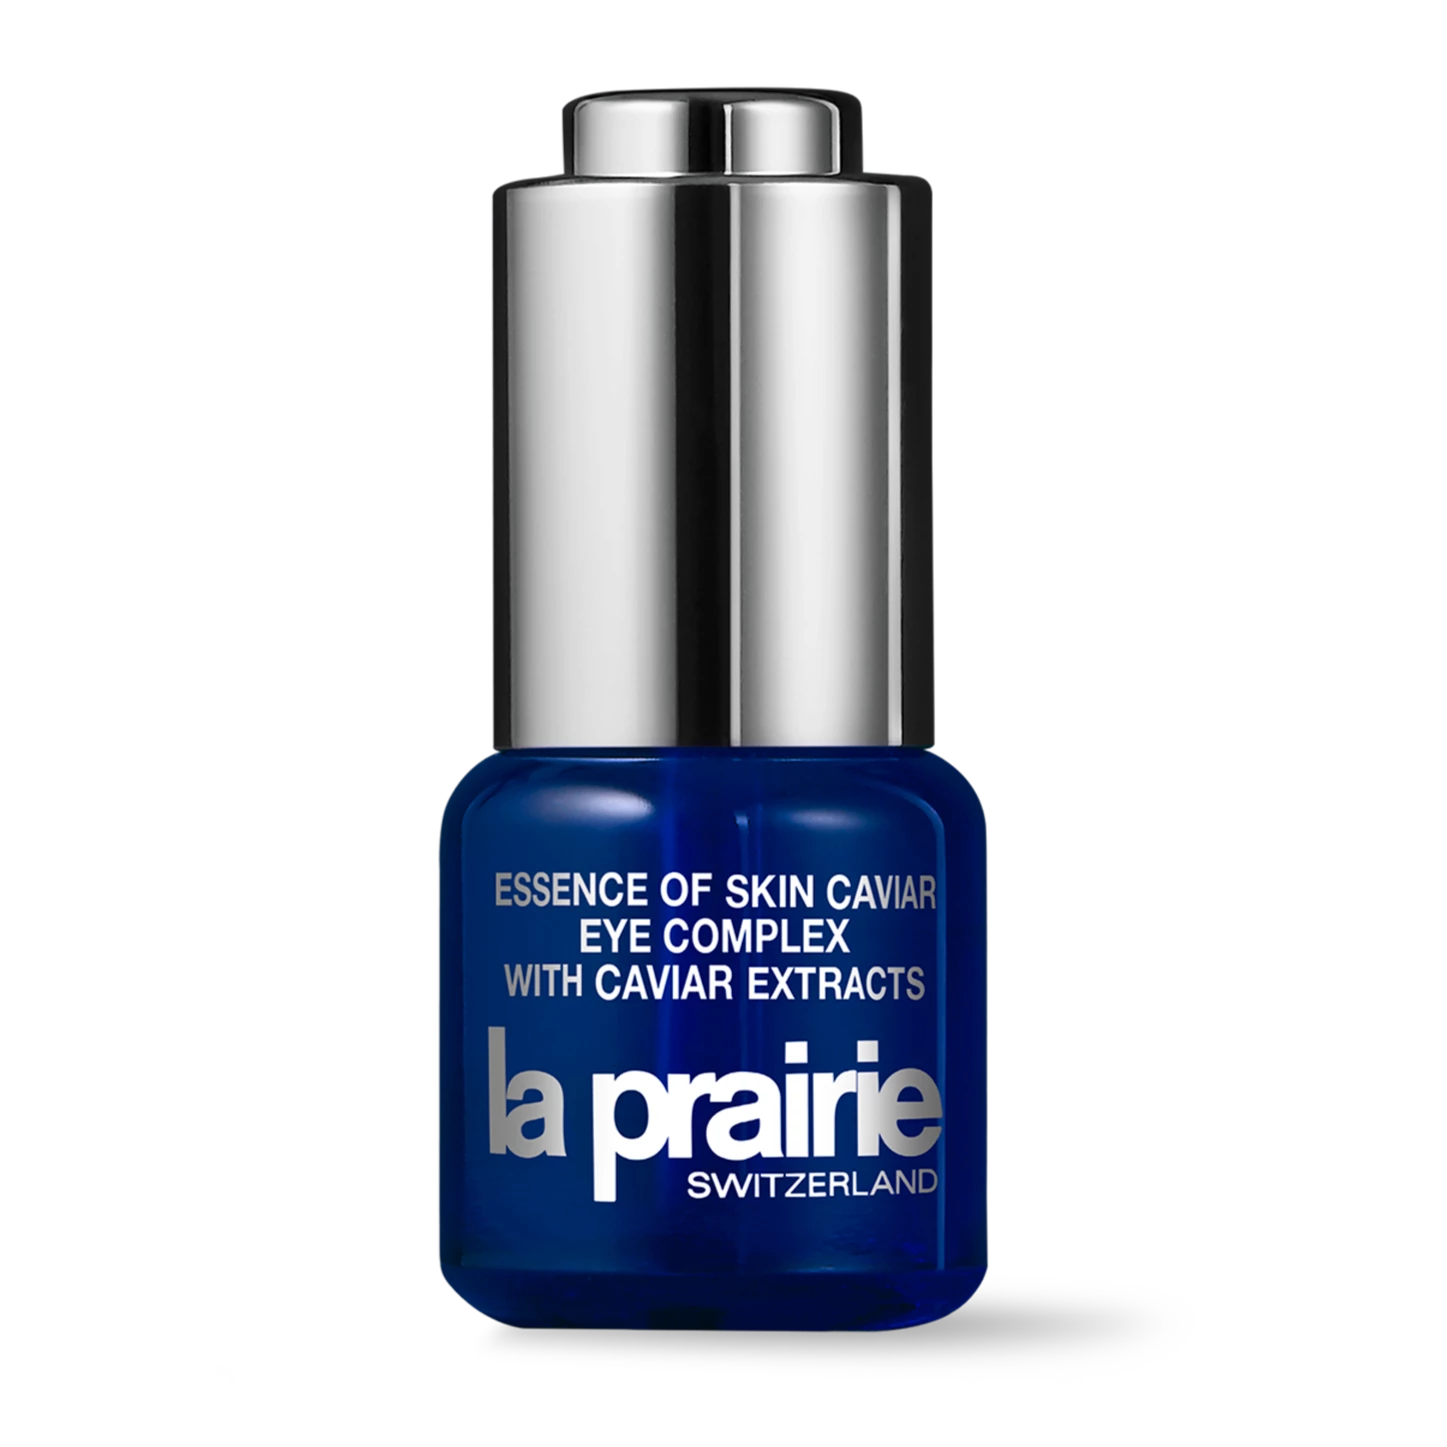 La Prairie Essence Skin Caviar Eye Complex 15ml / 0.5oz - 10 PIECE LOT